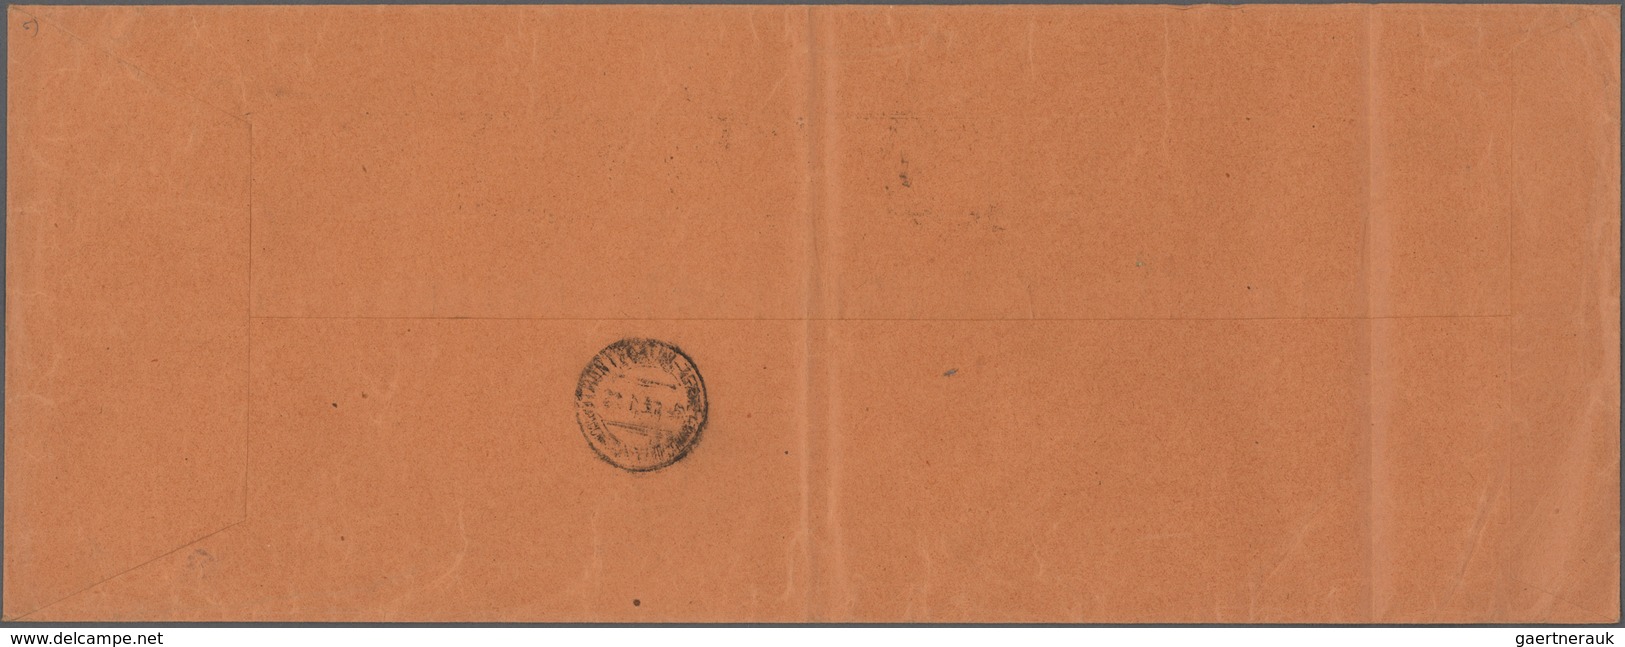 00963 Italien: 1926/1931, Bank Correspondance "CASSA DI RISPARMIO DI LUCCA", Group Of Five Highly Franked - Storia Postale